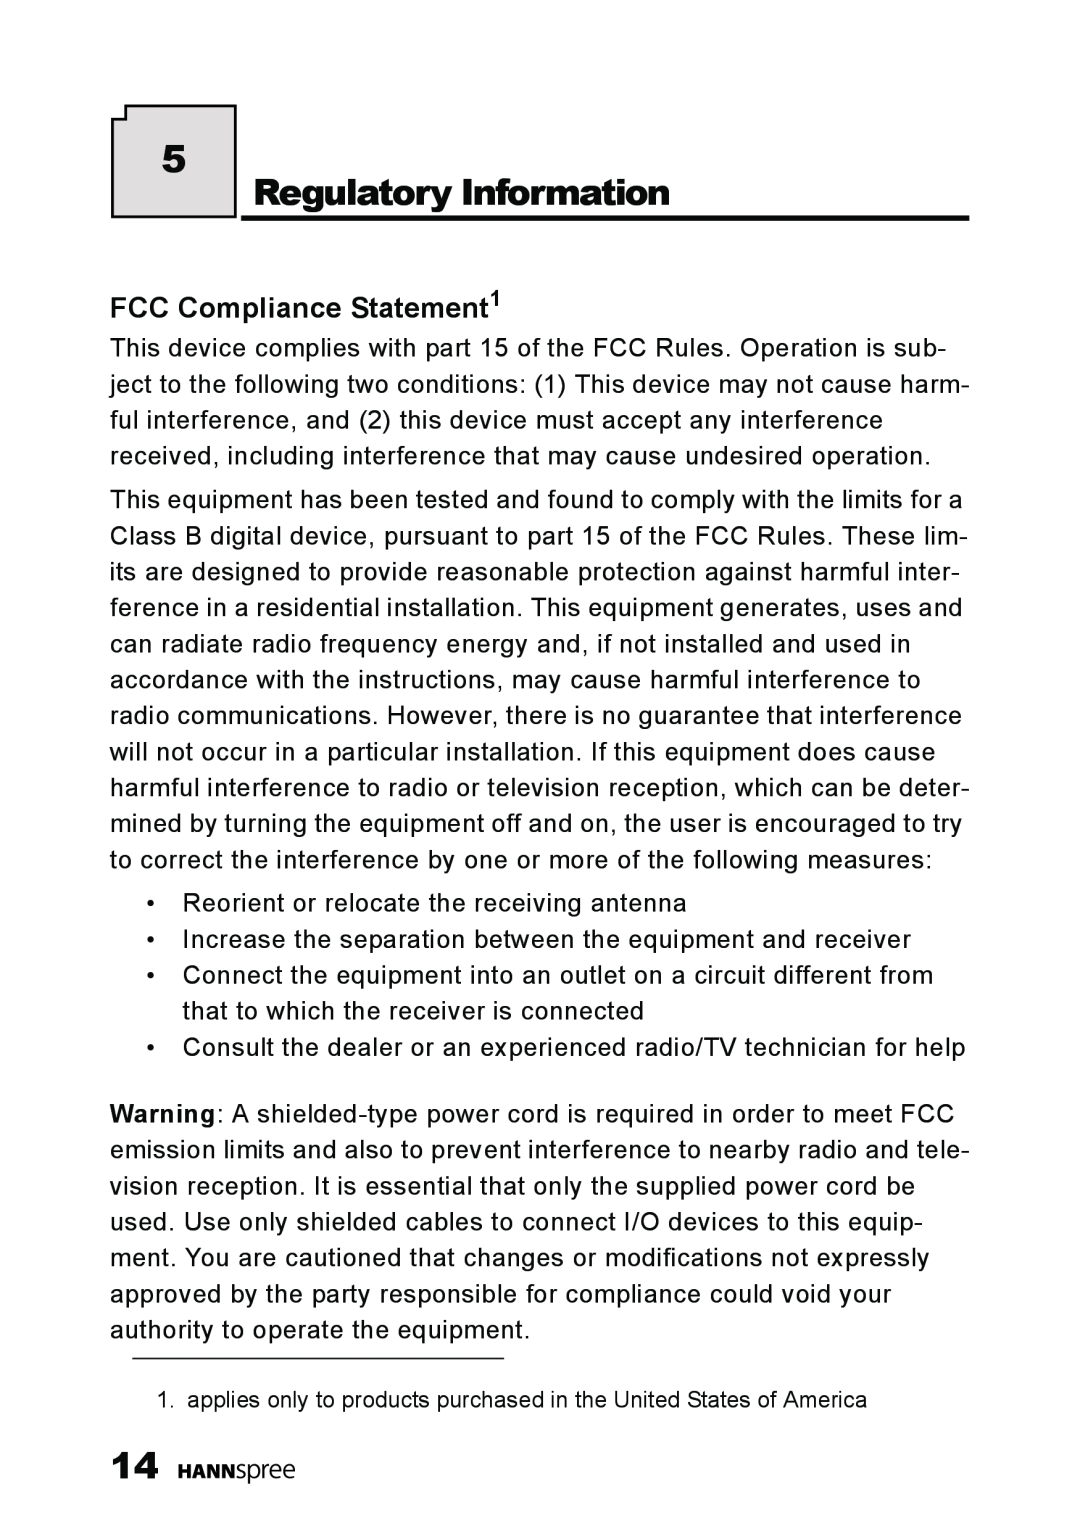 HANNspree ST09-10A1 user manual Regulatory Information, FCC Compliance Statement1 